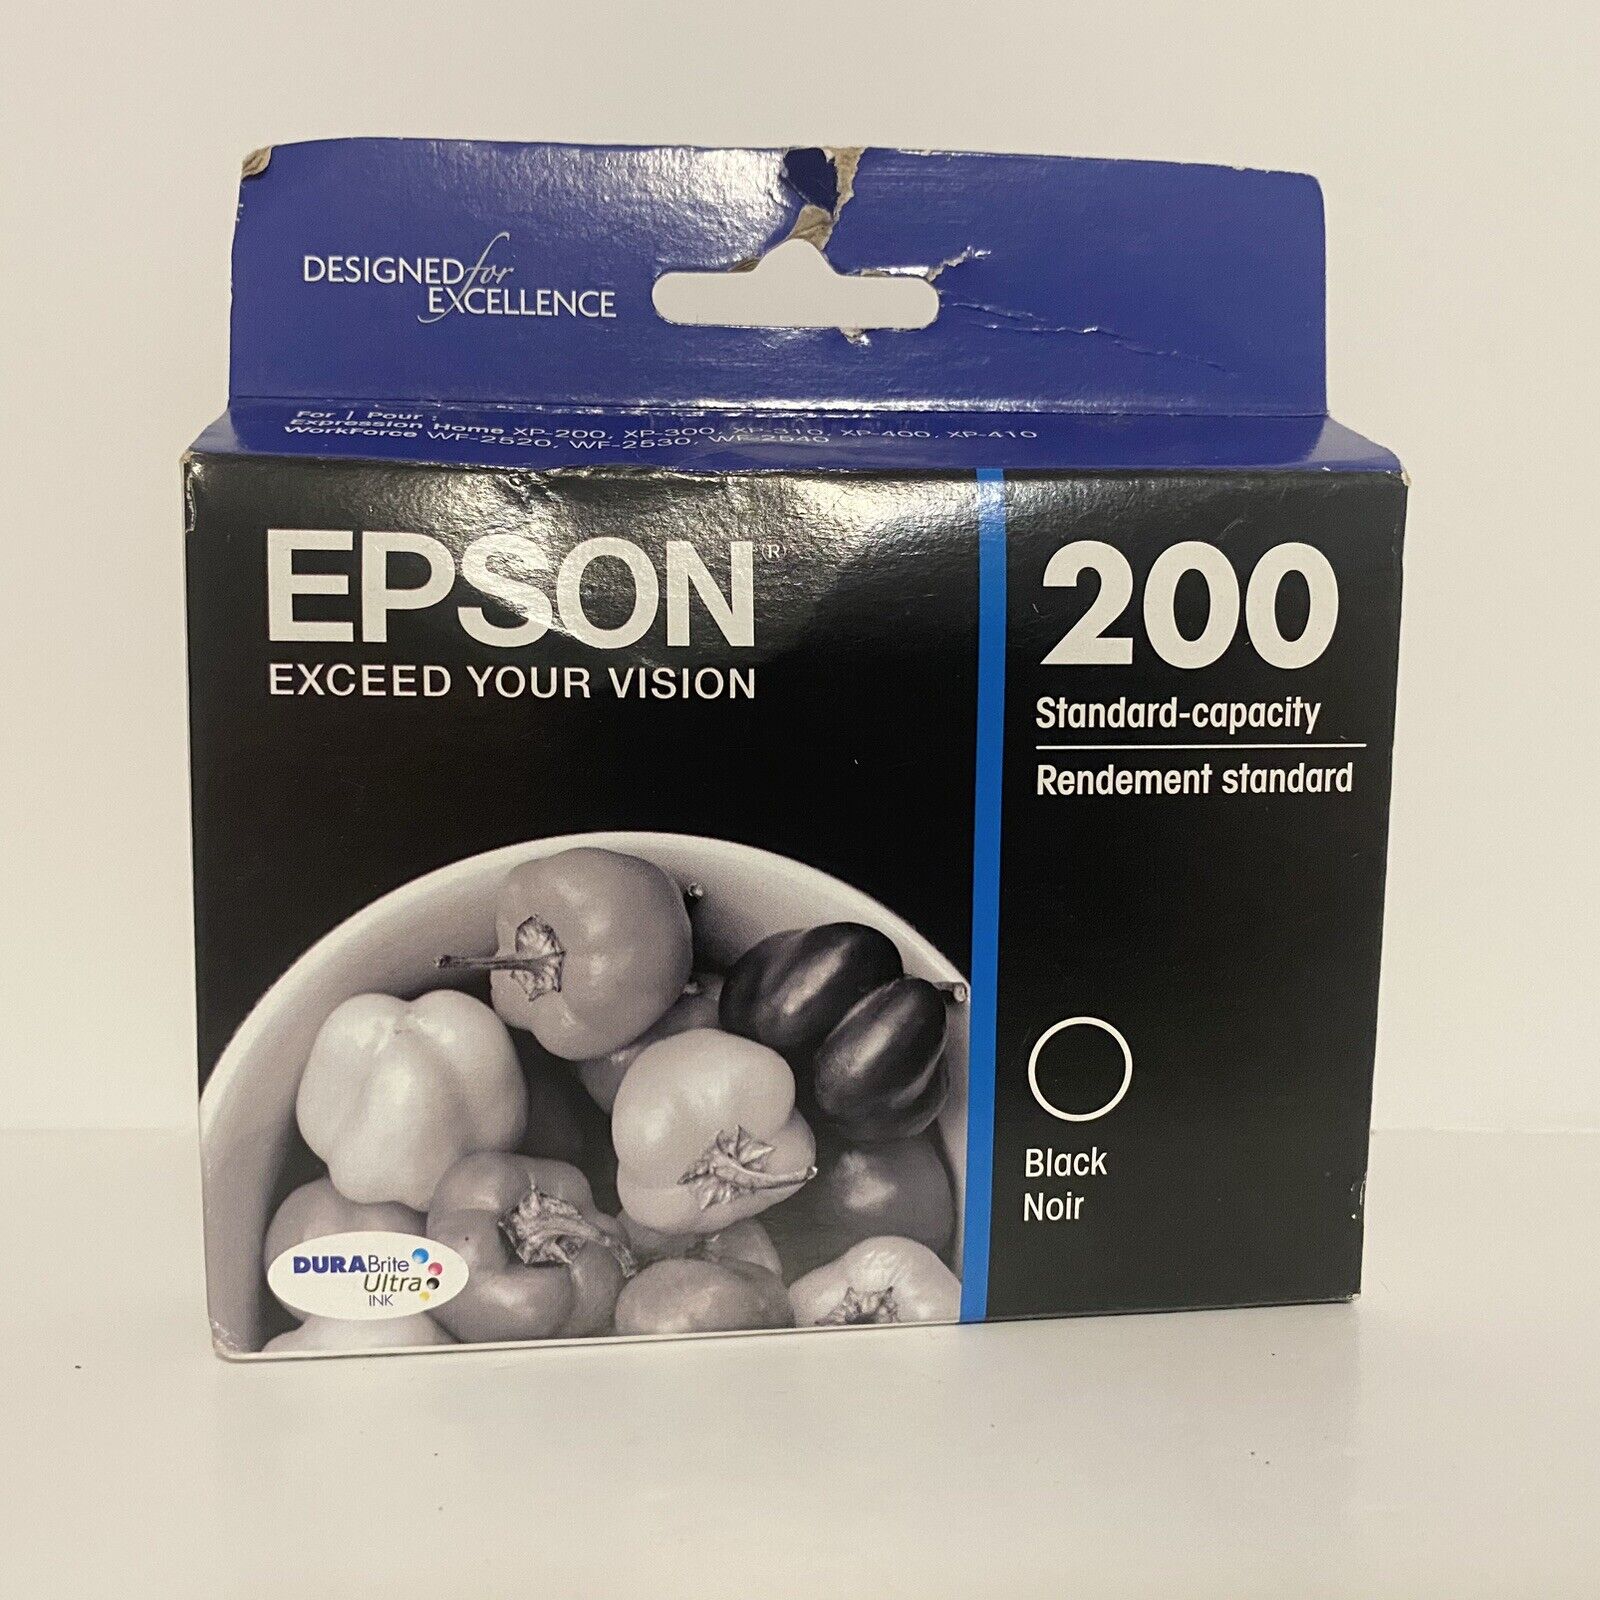 Epson 200 Ink Cartridge Black Expired T20012 Sealed Standard Capacity